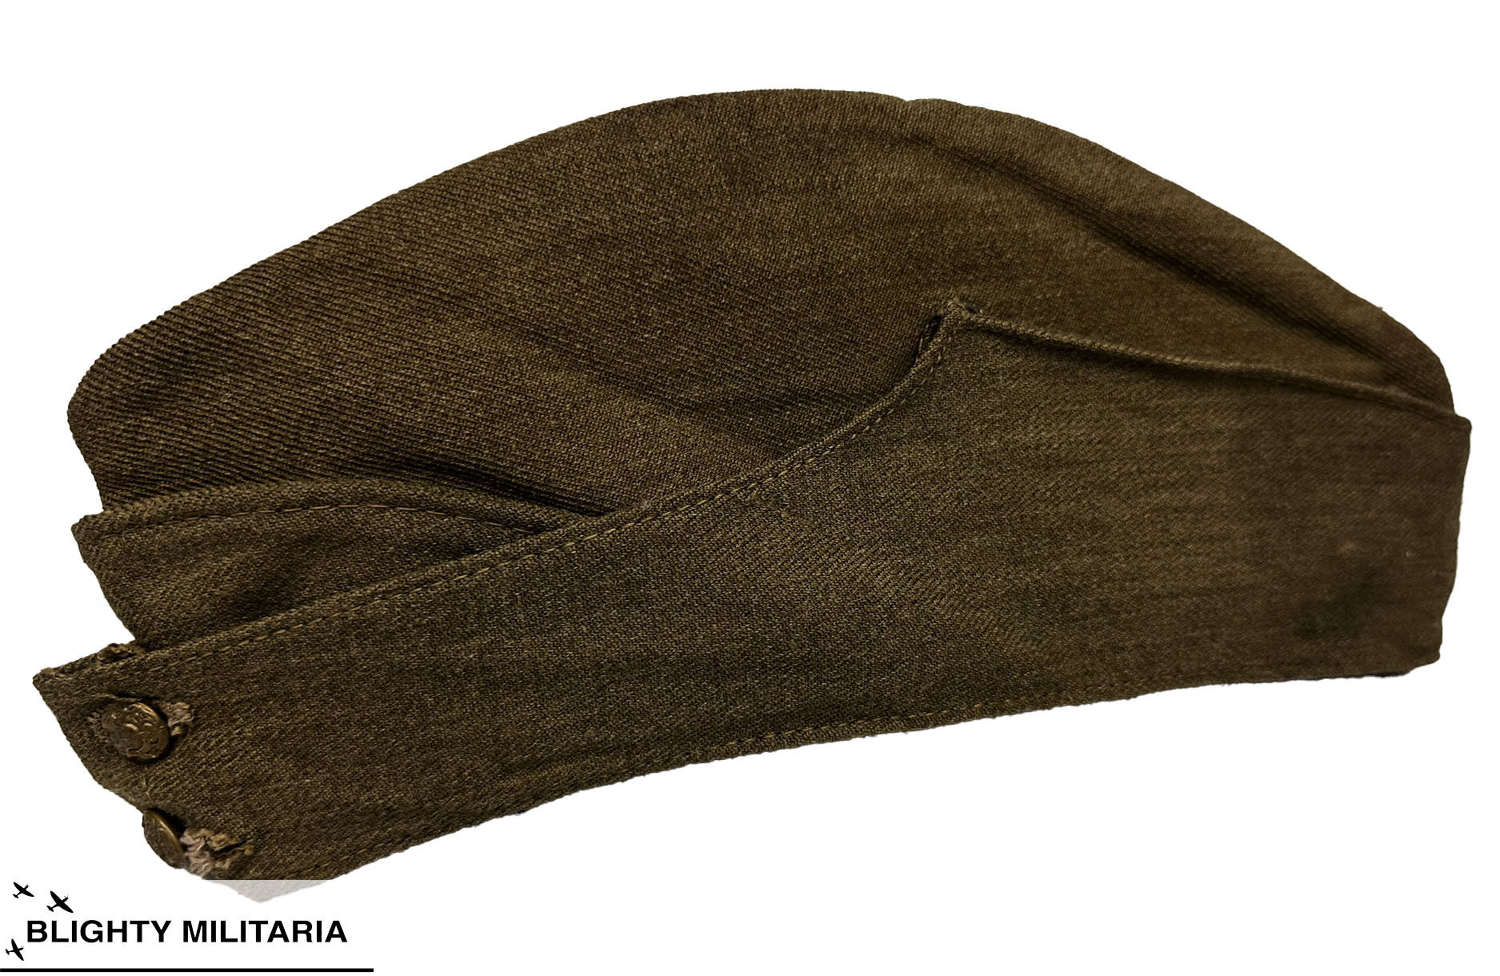 Original 1943 Dated British Army Field Service Cap - Size 6 5/8